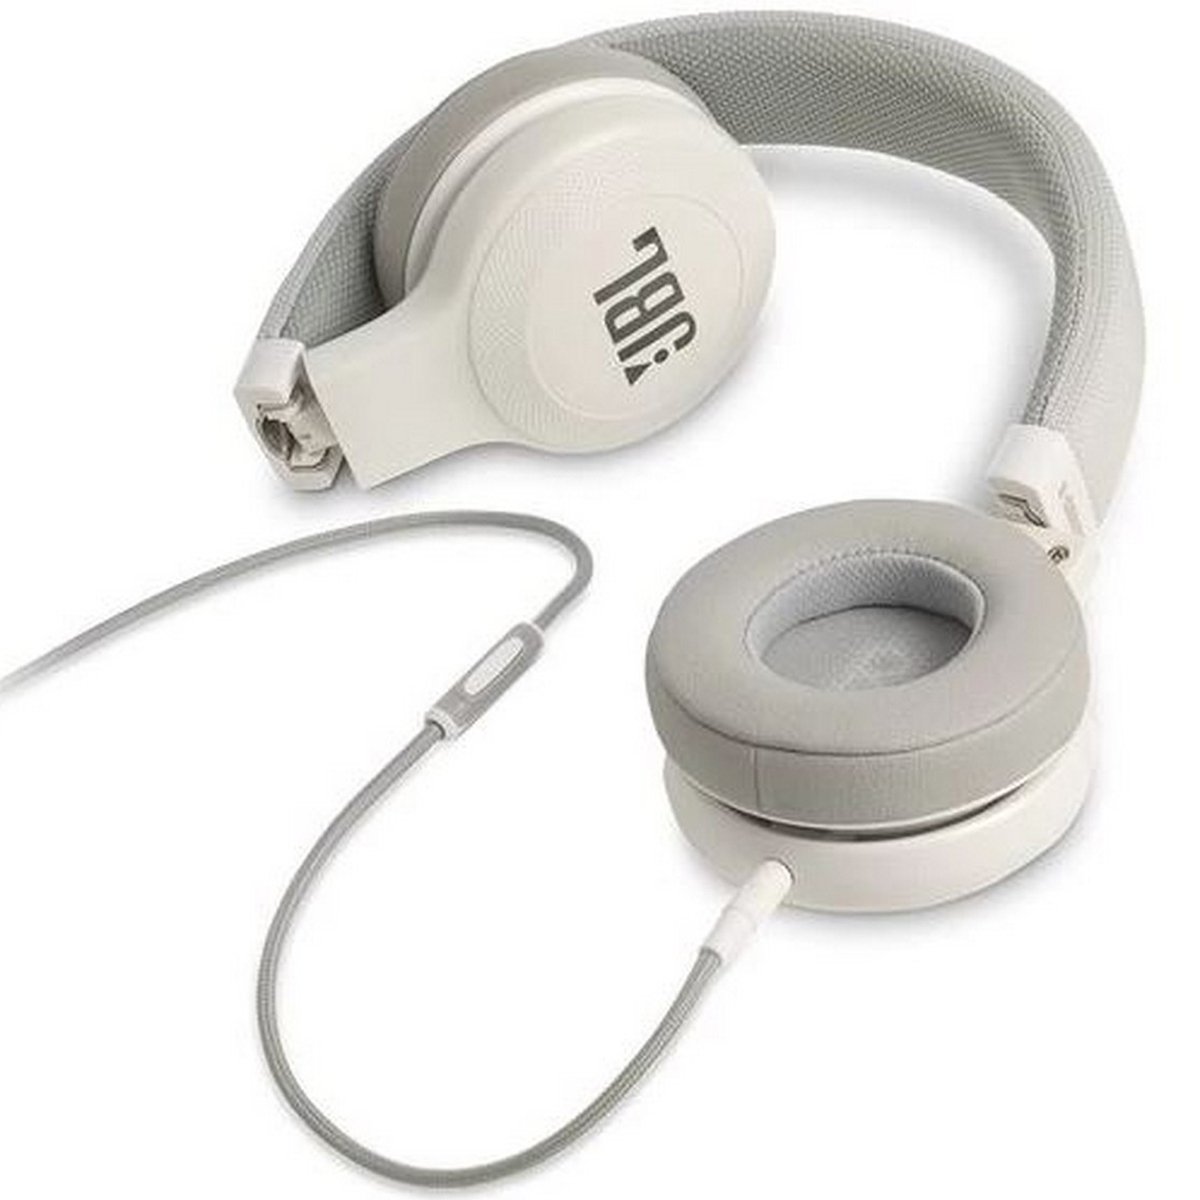 JBL On-ear Headphone E35 White